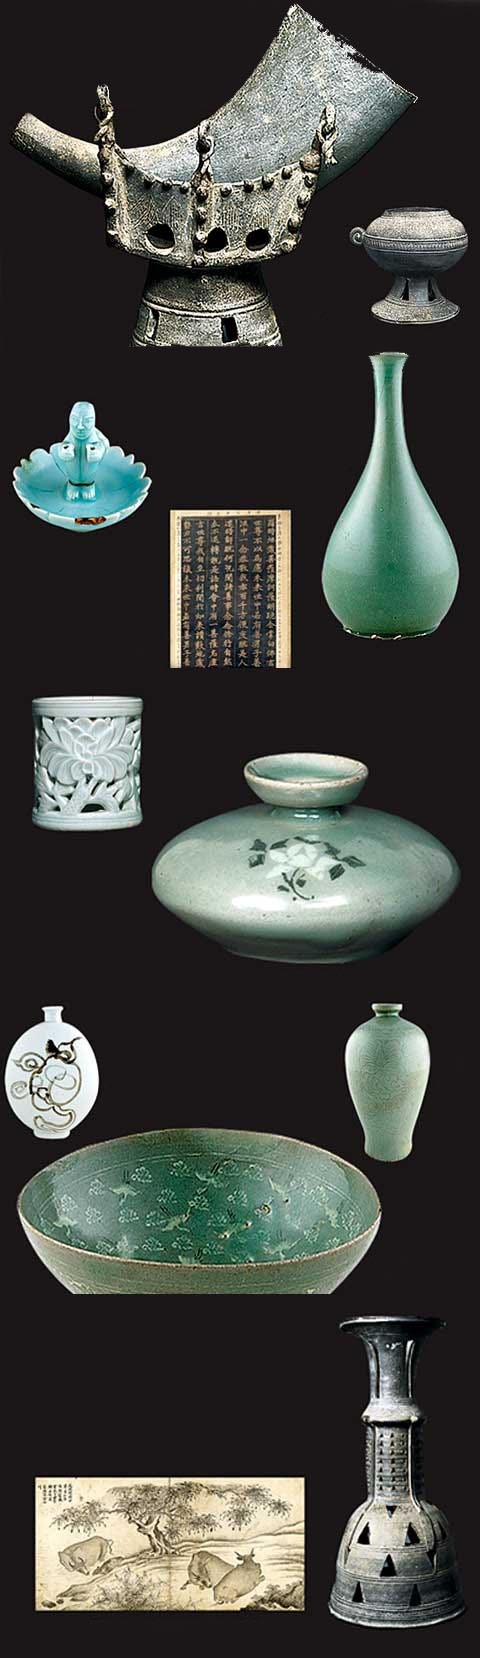 Henderson’s Korean Artifacts Collection; Korean National Treasures